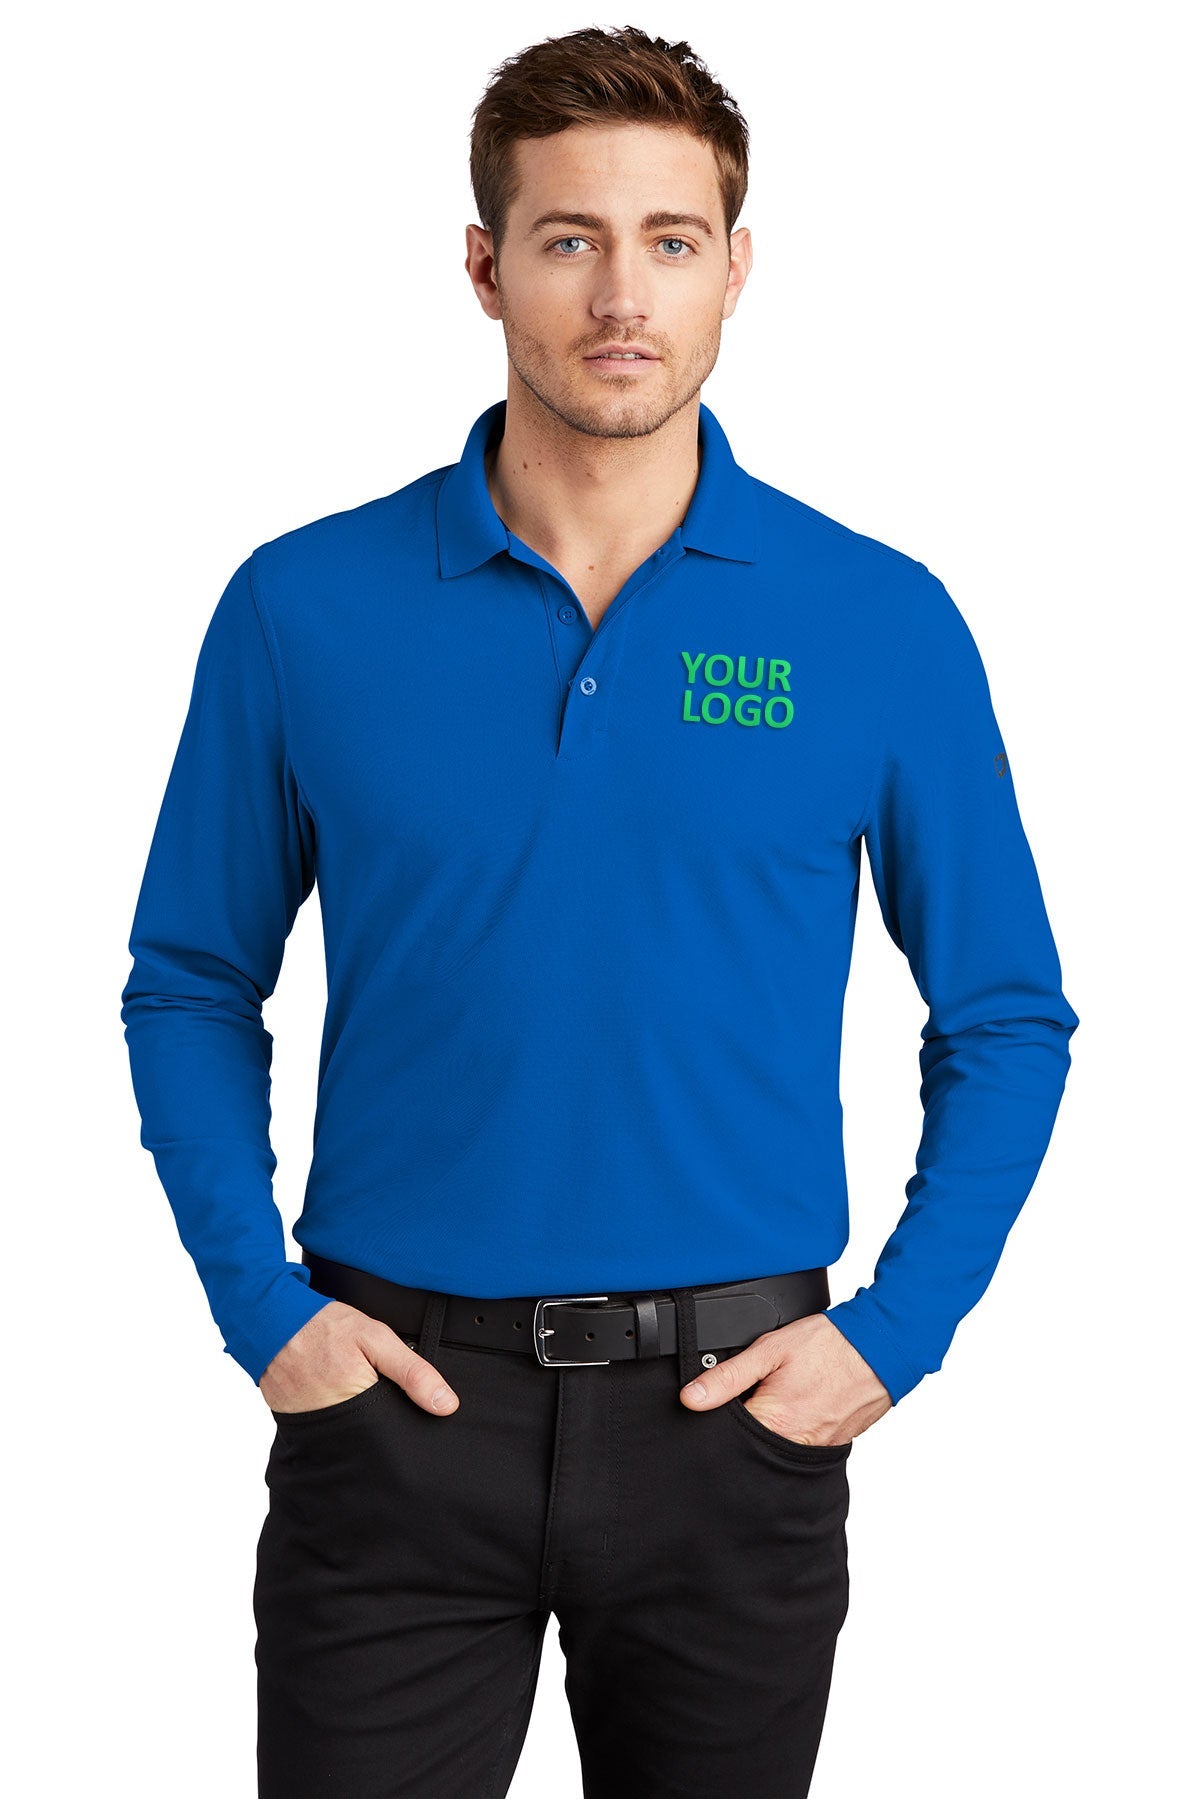 OGIO Electric Blue OG105 polo shirts with logo embroidery